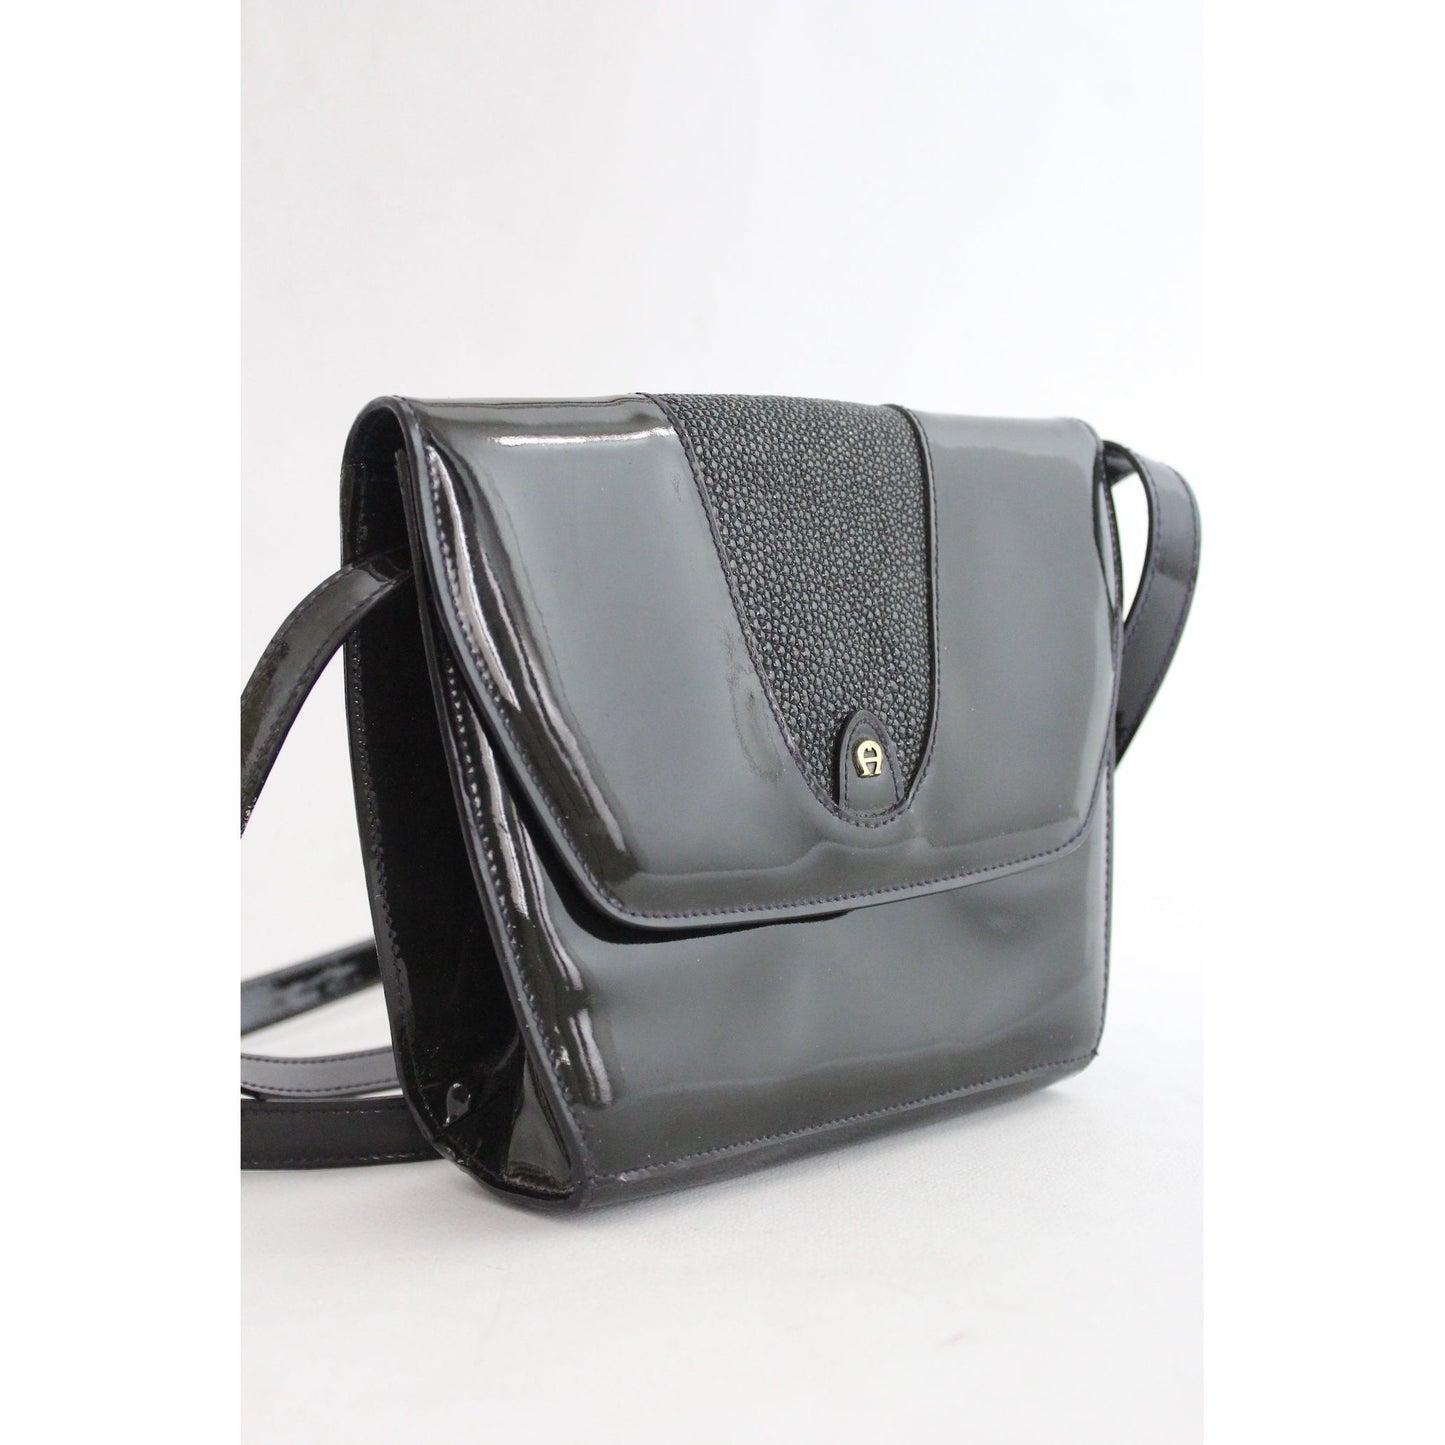 Aigner Black Patent Leather Vintage Bag